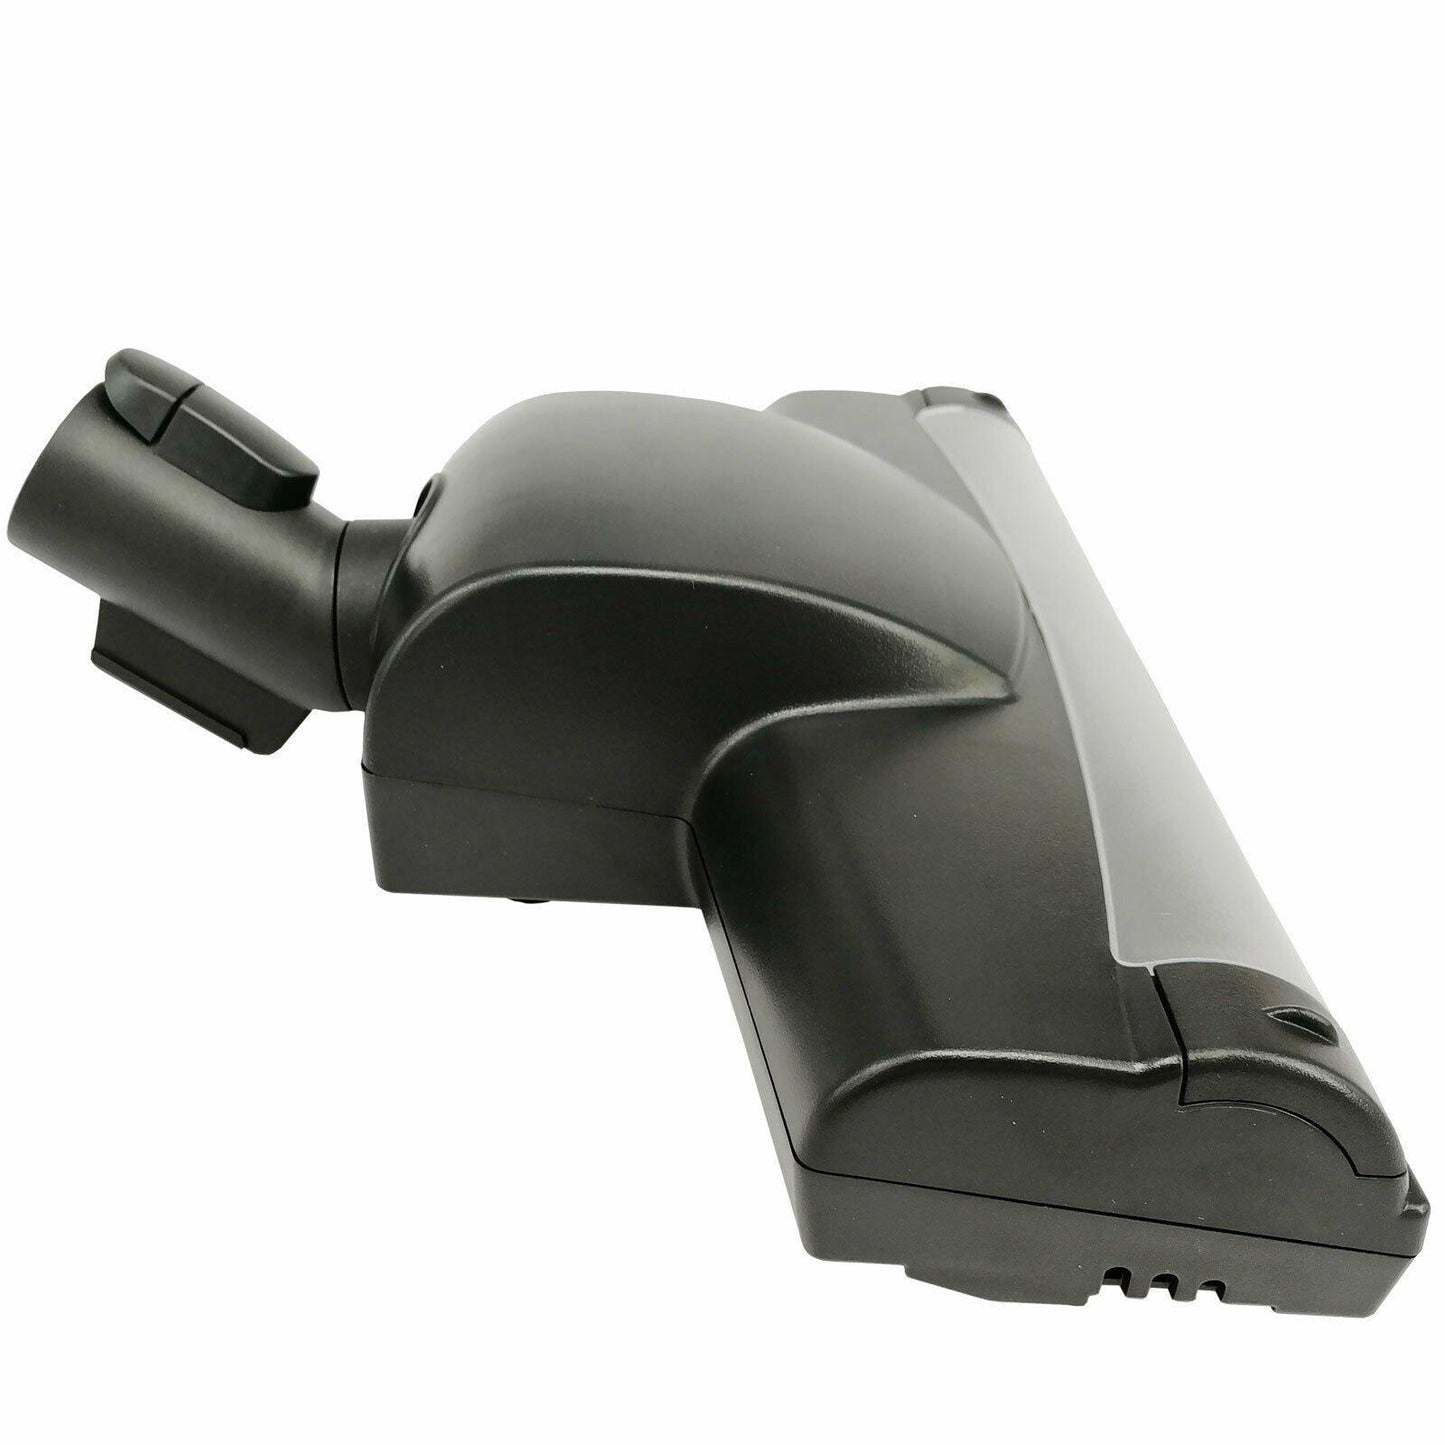 Vacuum Floor Tool Turbo Brush Head For Miele COMPLETE C2 C3 S2 S5 S8 Cleaner Sparesbarn